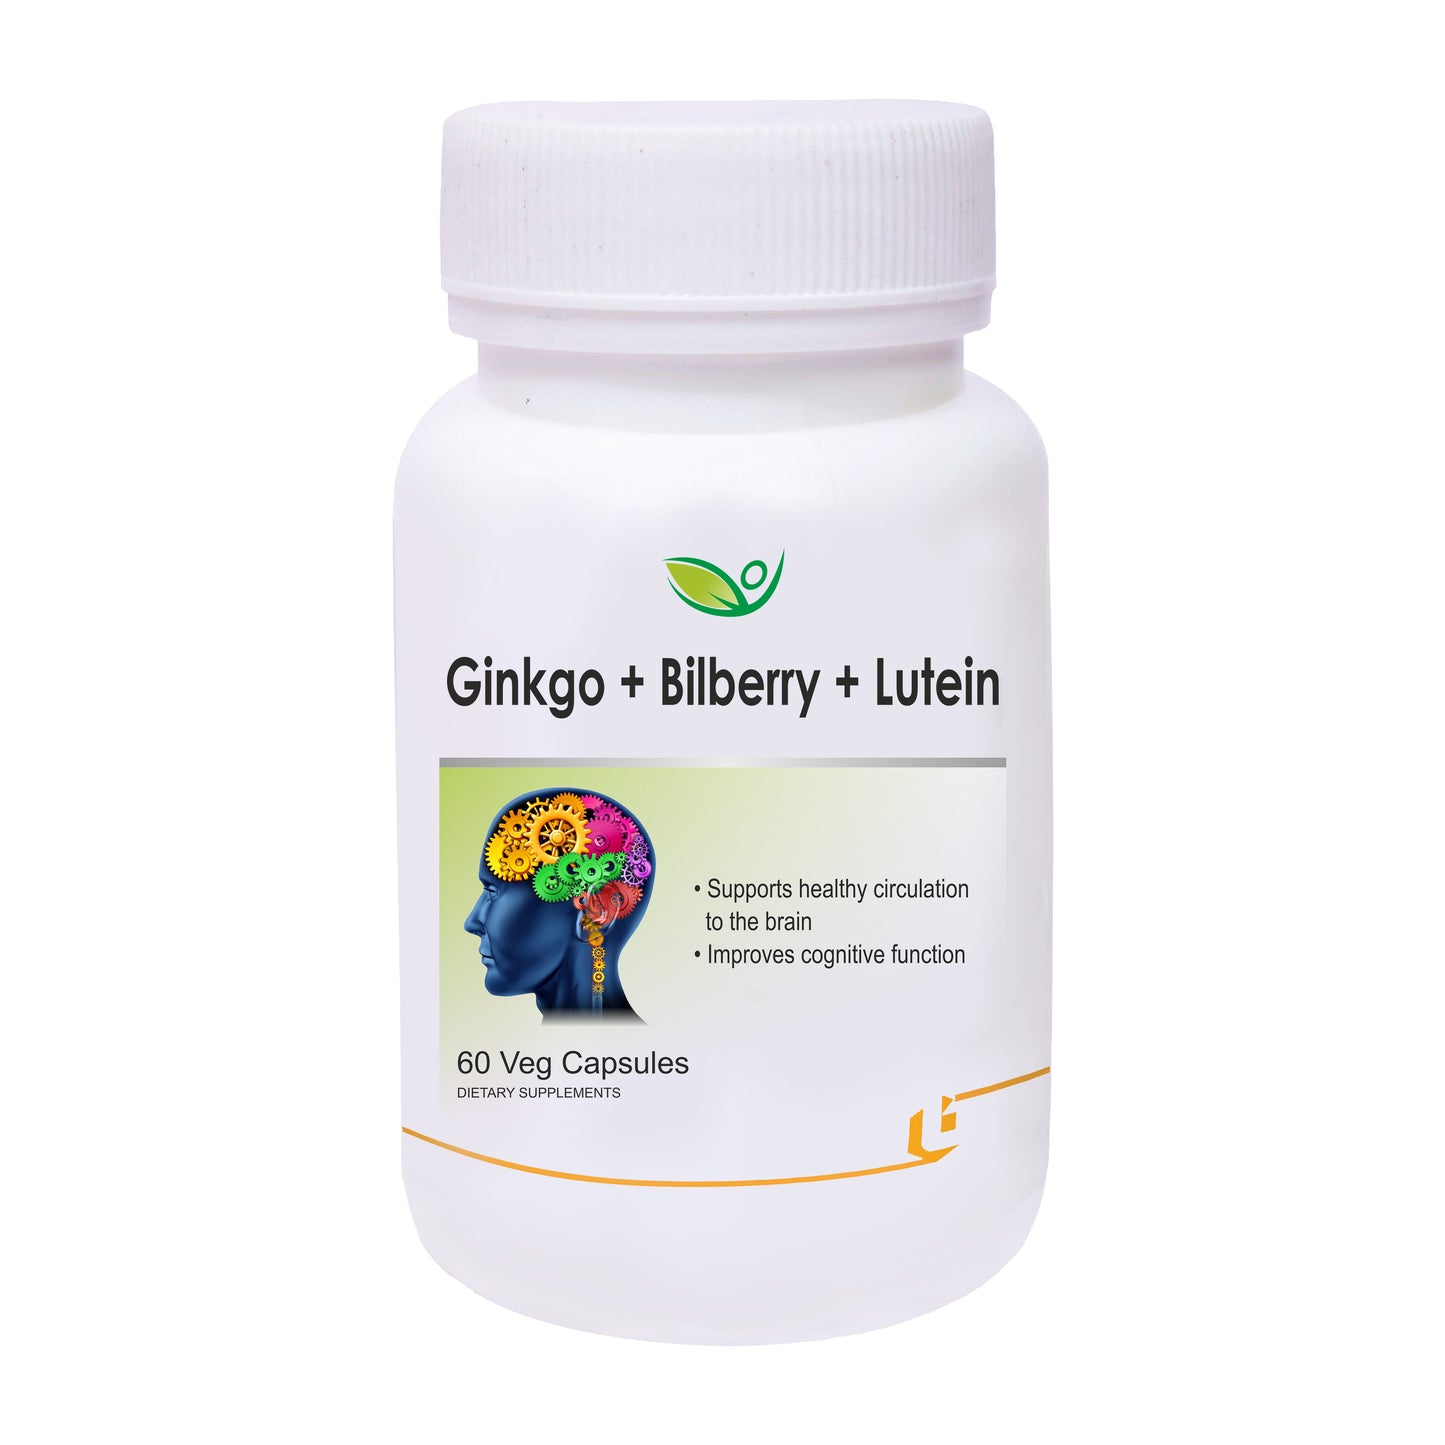 Biotrex Ginkgo+Bilberry+Lutein - 60 Capsules